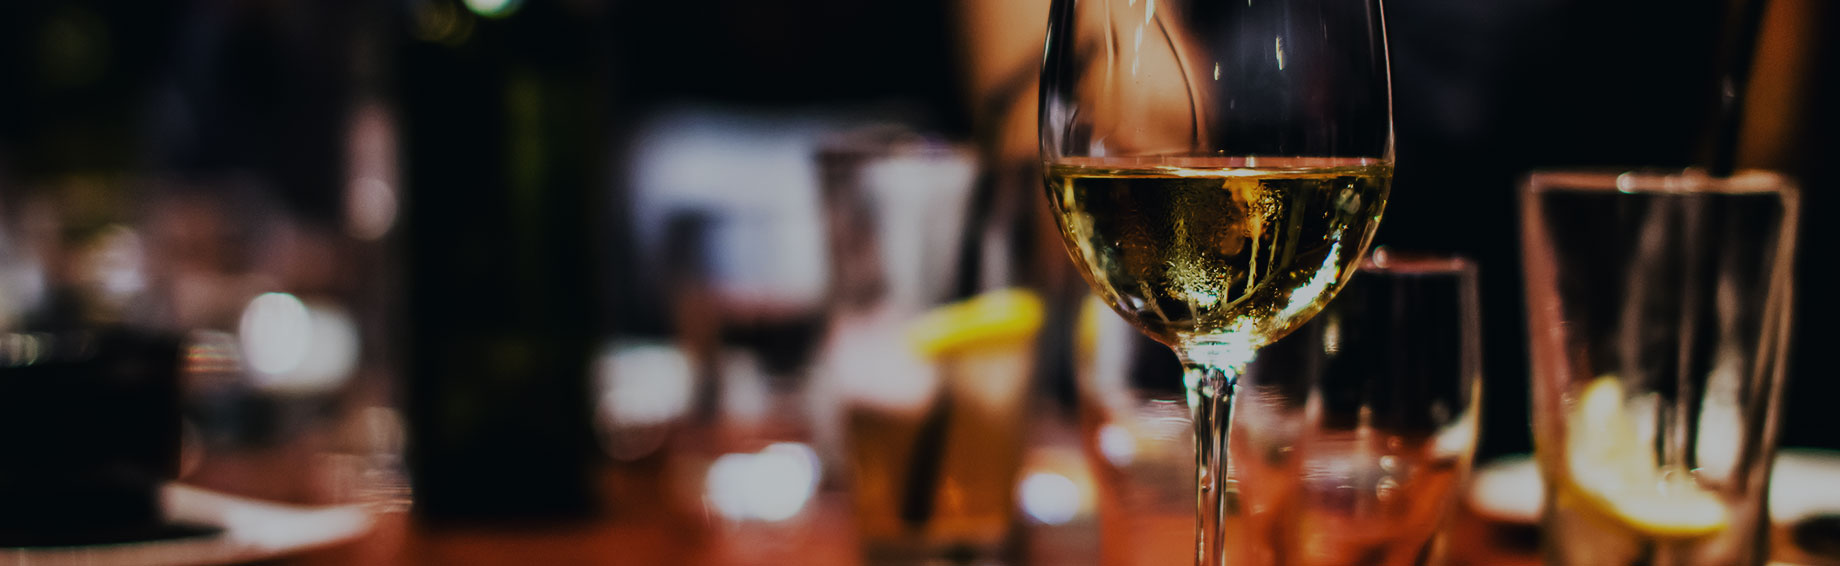 Vino bianco dell'Oltrepò in bicchiere